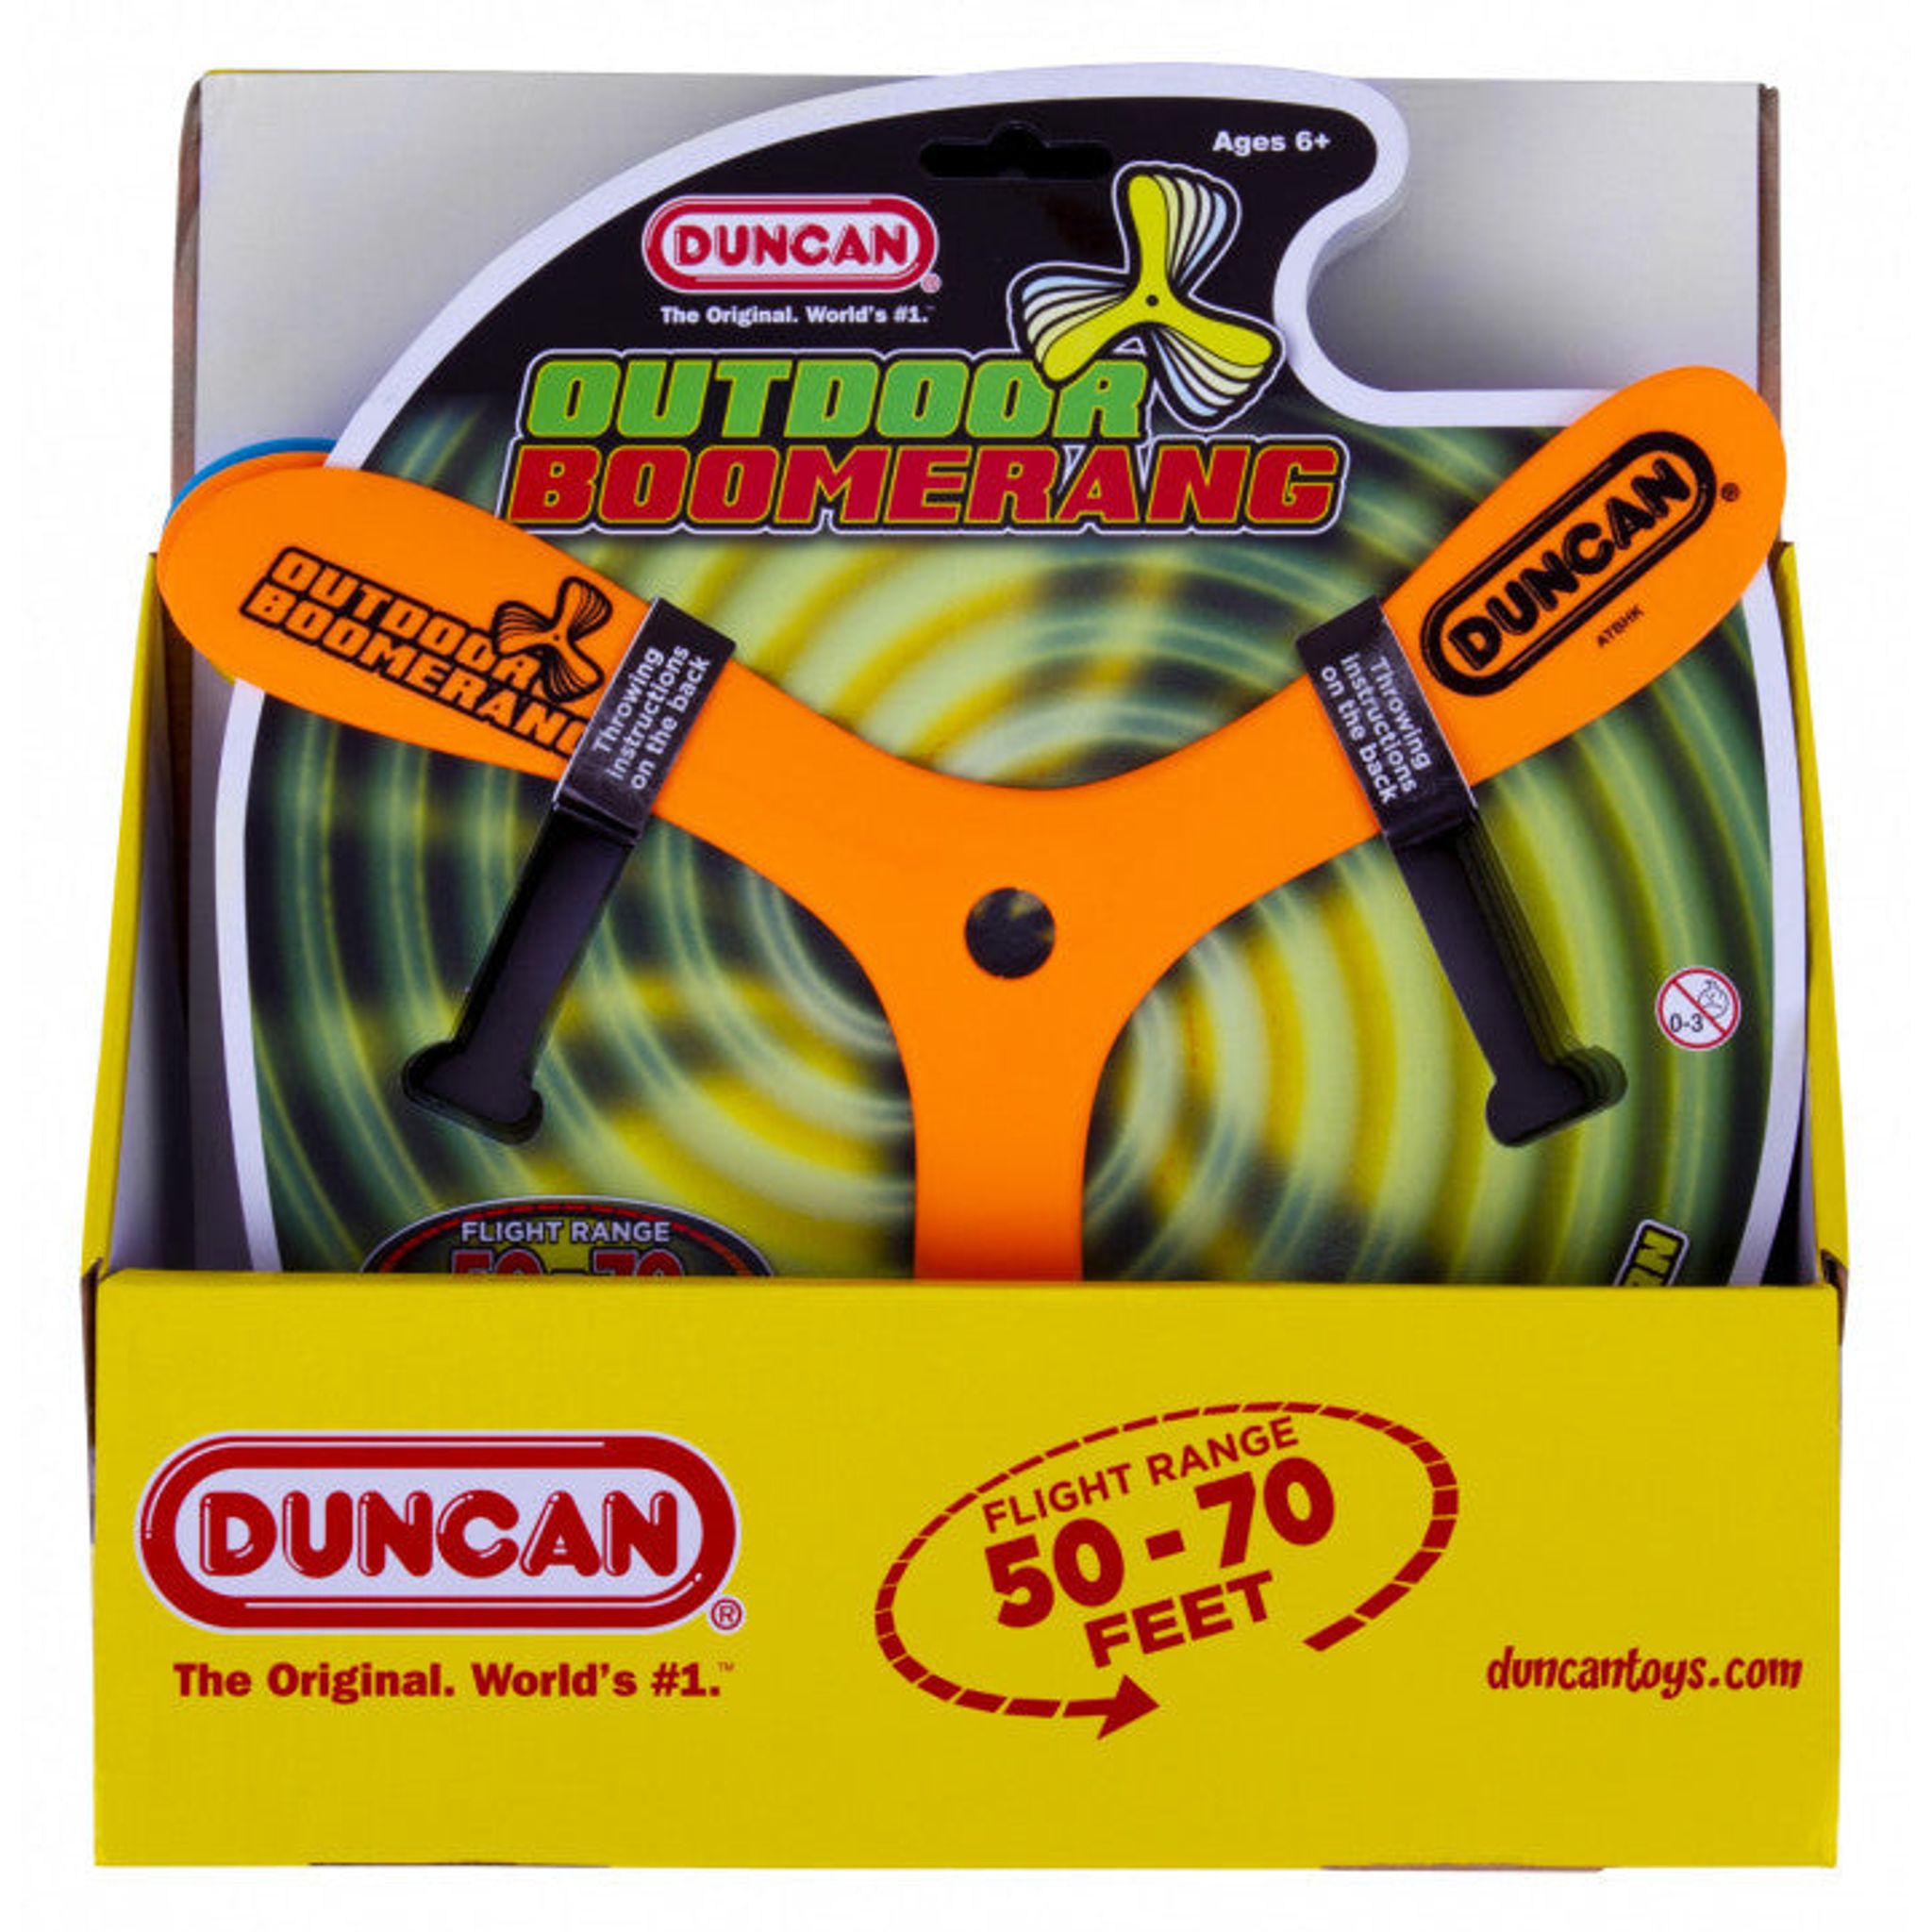 Duncan Outdoor Boomerang - Toybox Tales